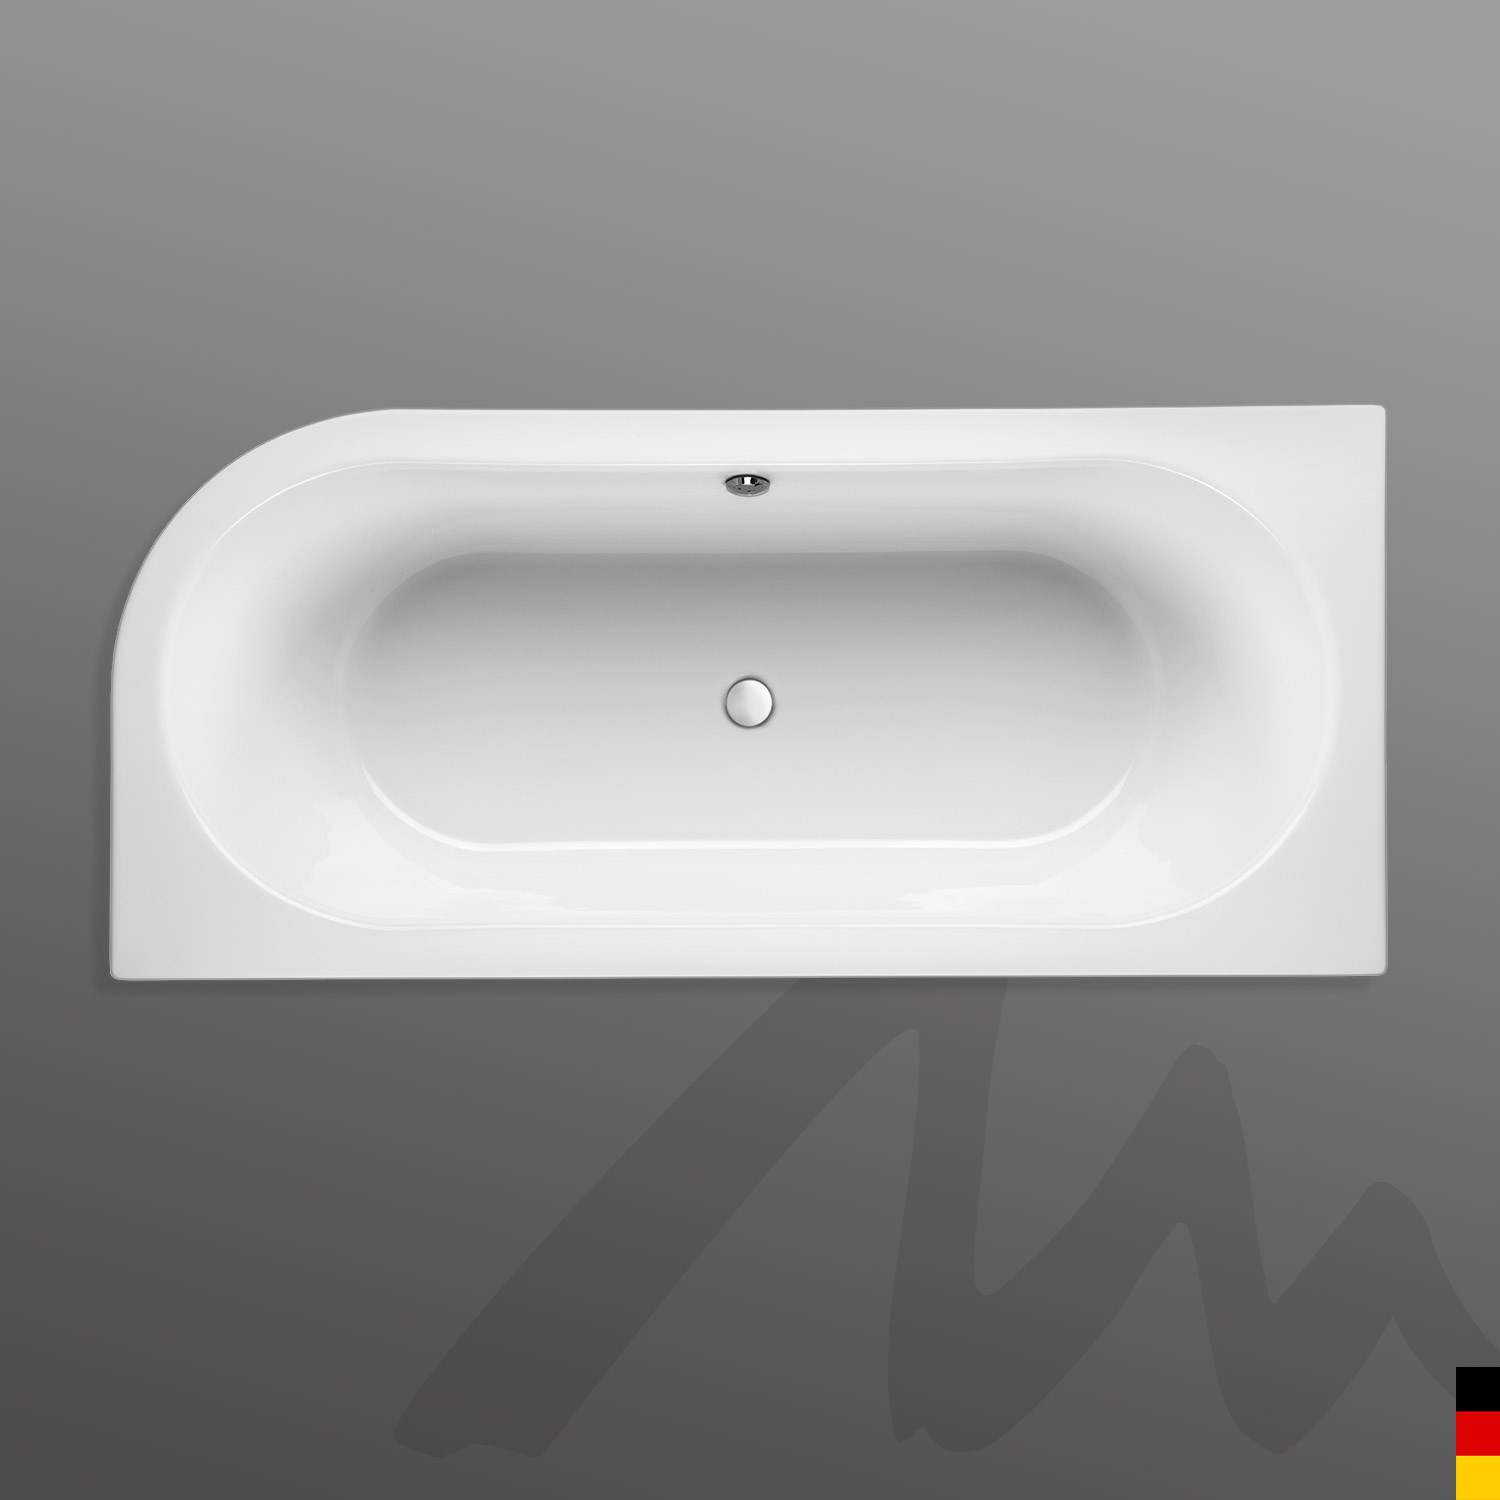 Mauersberger Badewanne Oval Primo 1 - 170/75 duo  Ausführung rechts  170x75x44  Farbe:weiß